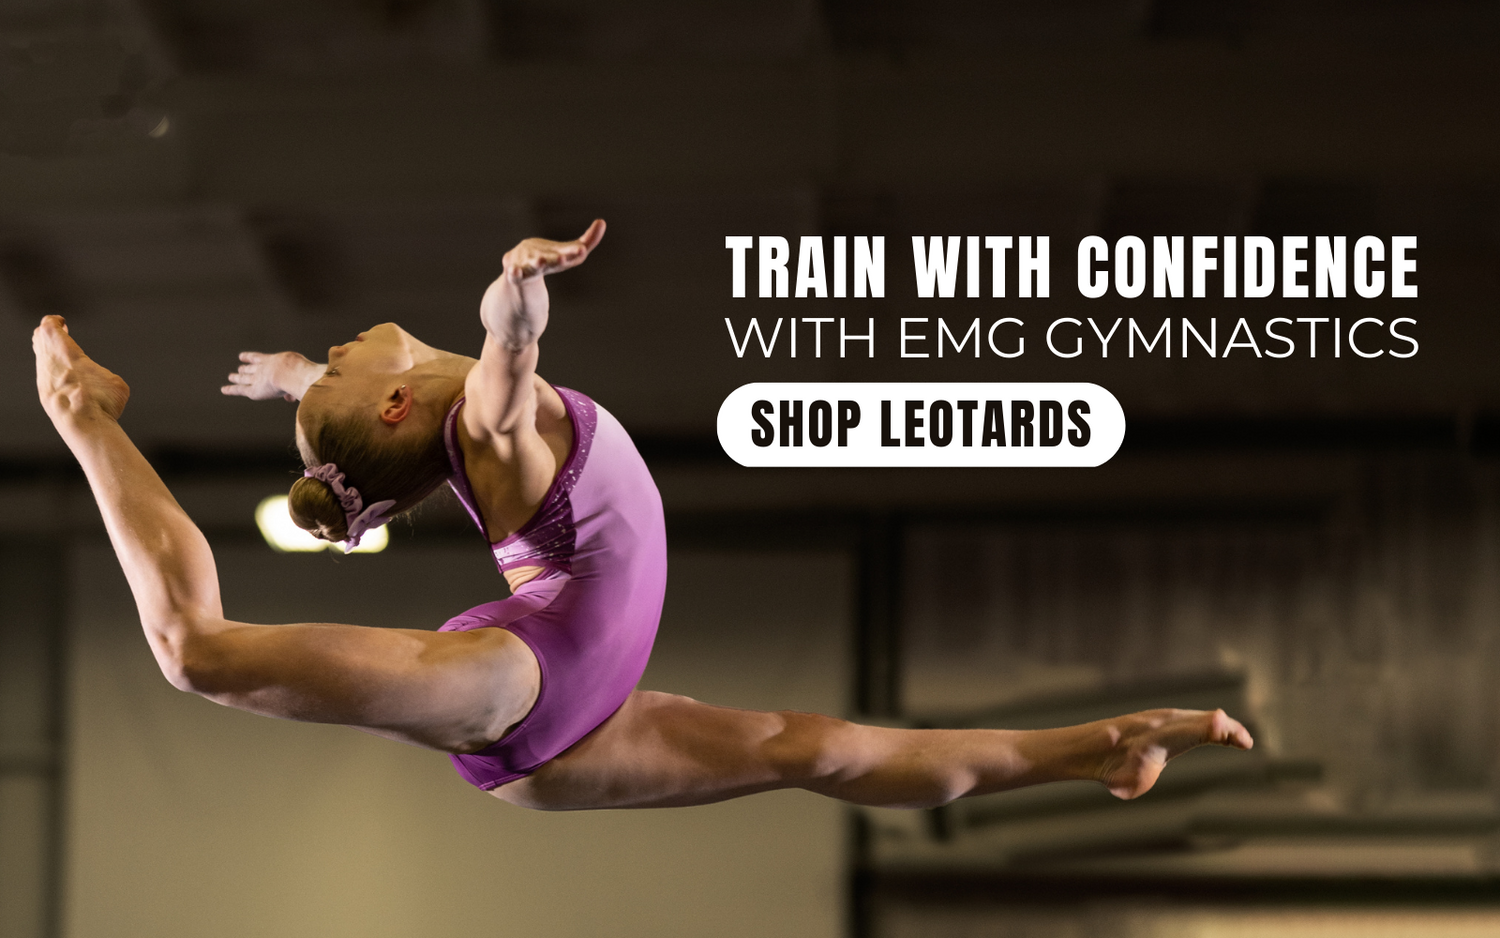 Train with Confidence with EMG Gymnastics, Shop Leotards